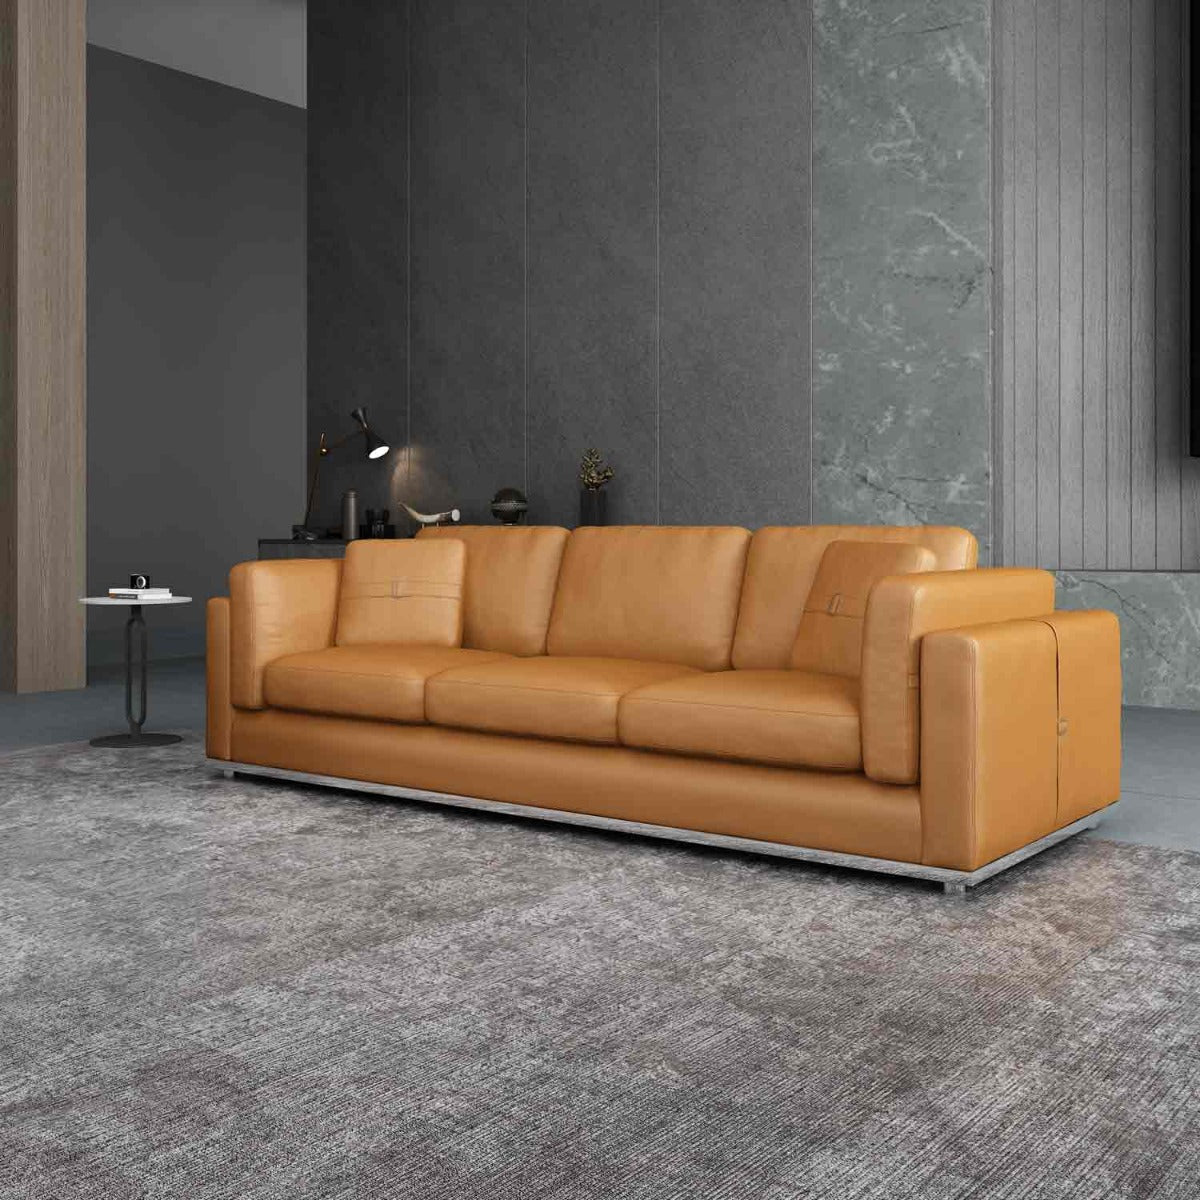 European Furniture - Picasso 3 Piece Living Room Set in Cognac - 25552-3SET - New Star Living